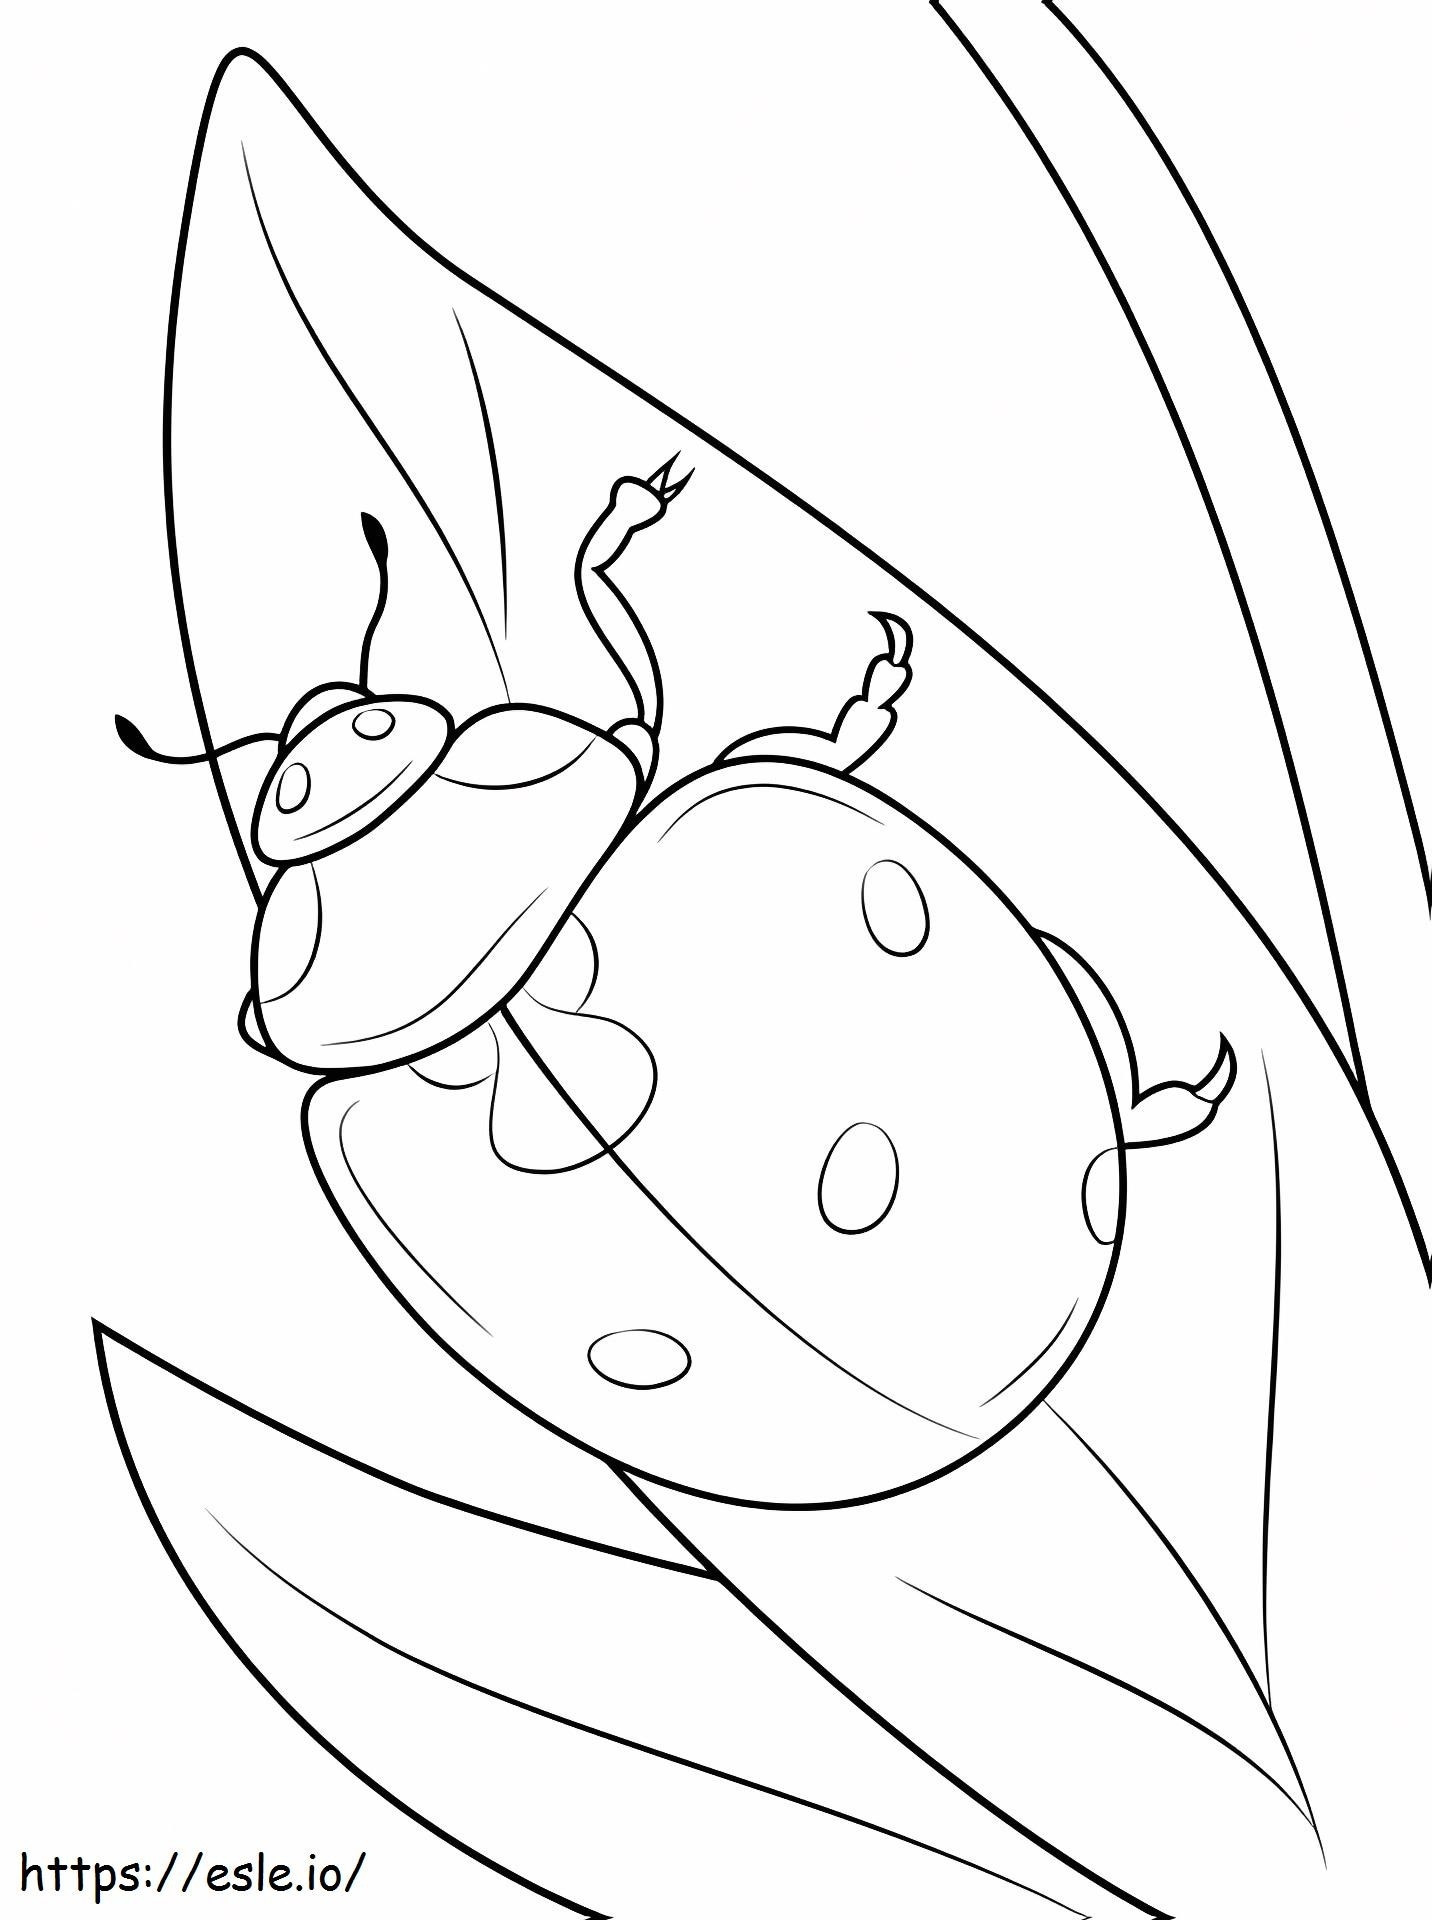 Ladybug1 coloring page